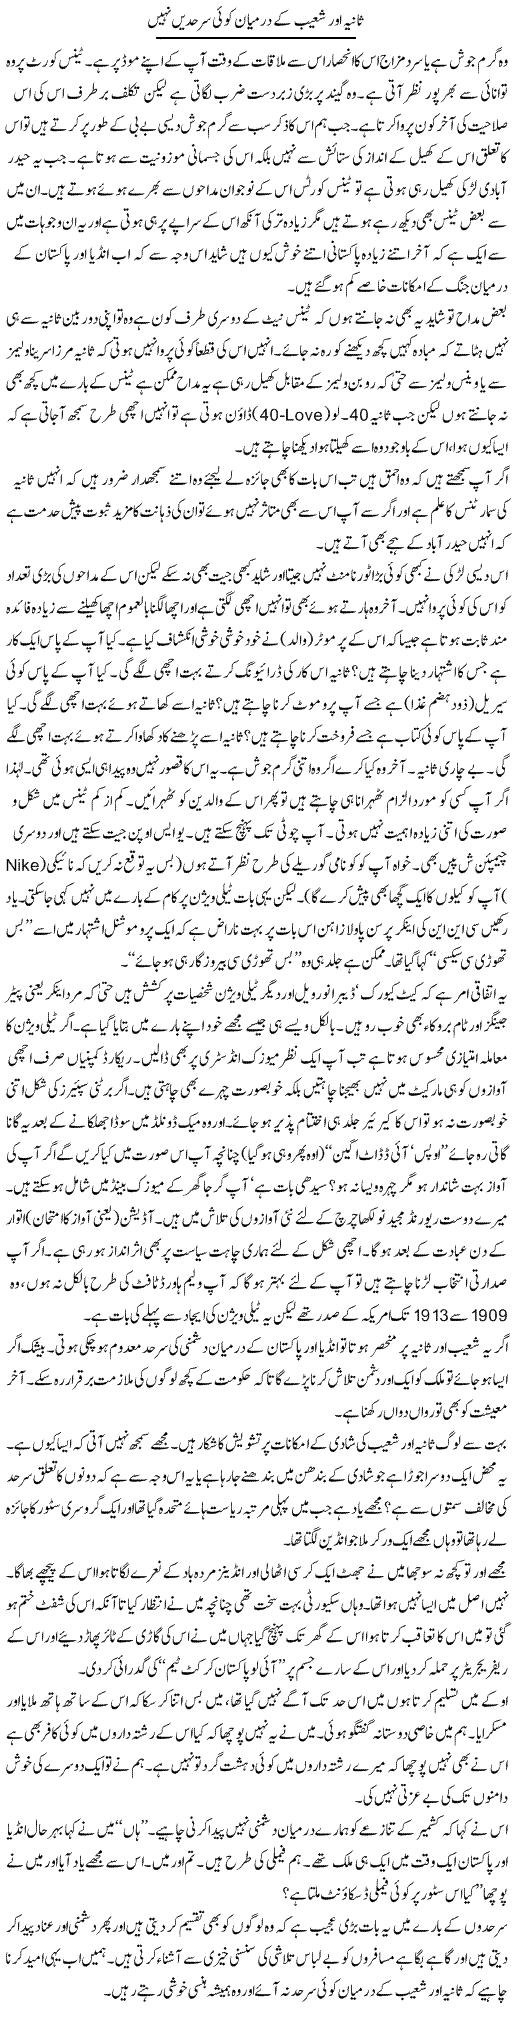 Shoaib sania sarhden Express Column Mubashir Luqman 9 April 2010